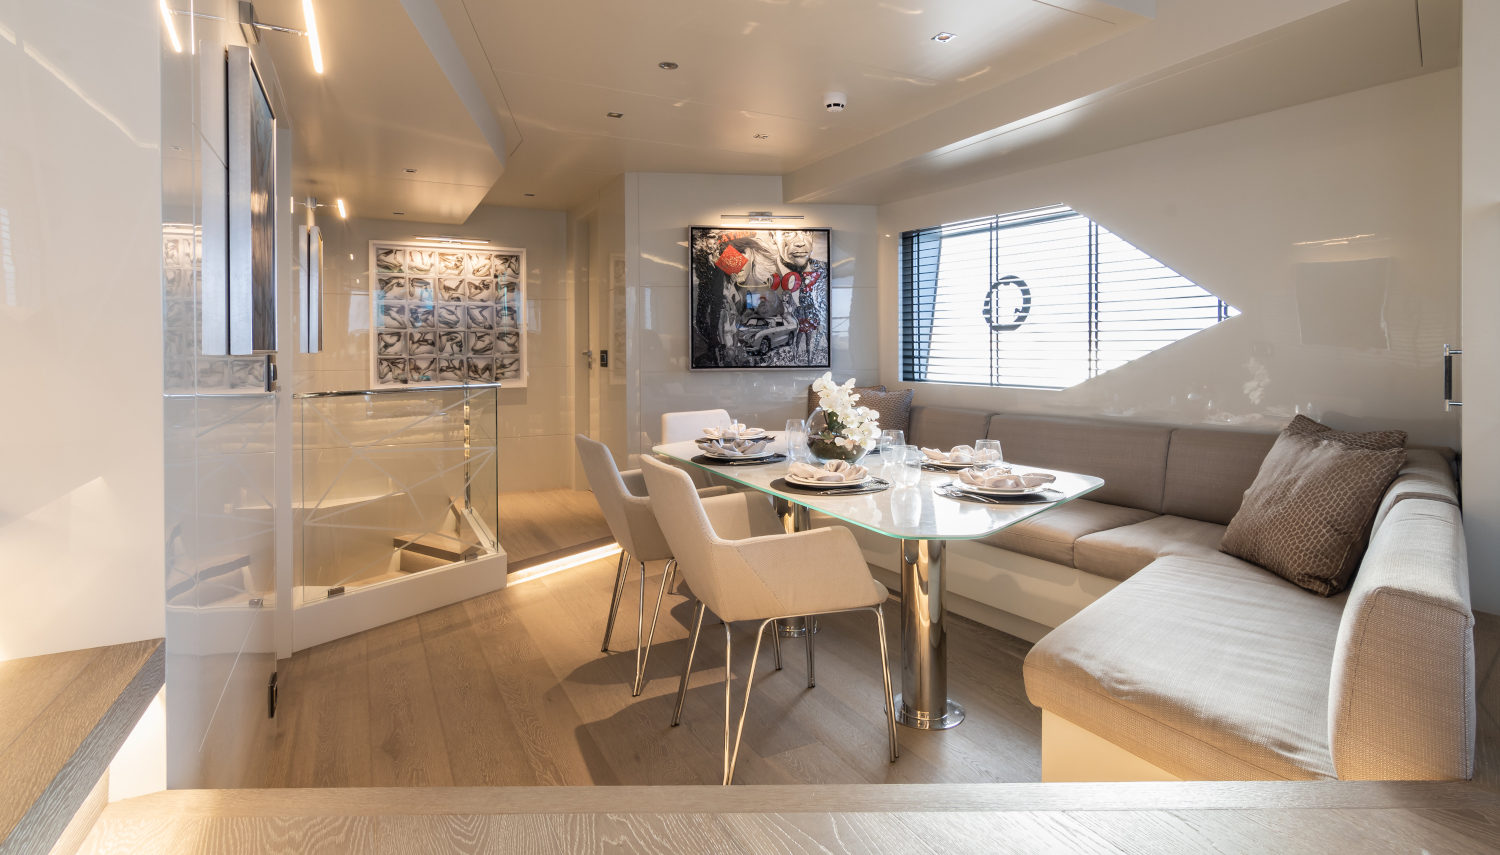 Vripack - ROCK - Dining area - Interior Design - Contemporary loft apartment look and feel